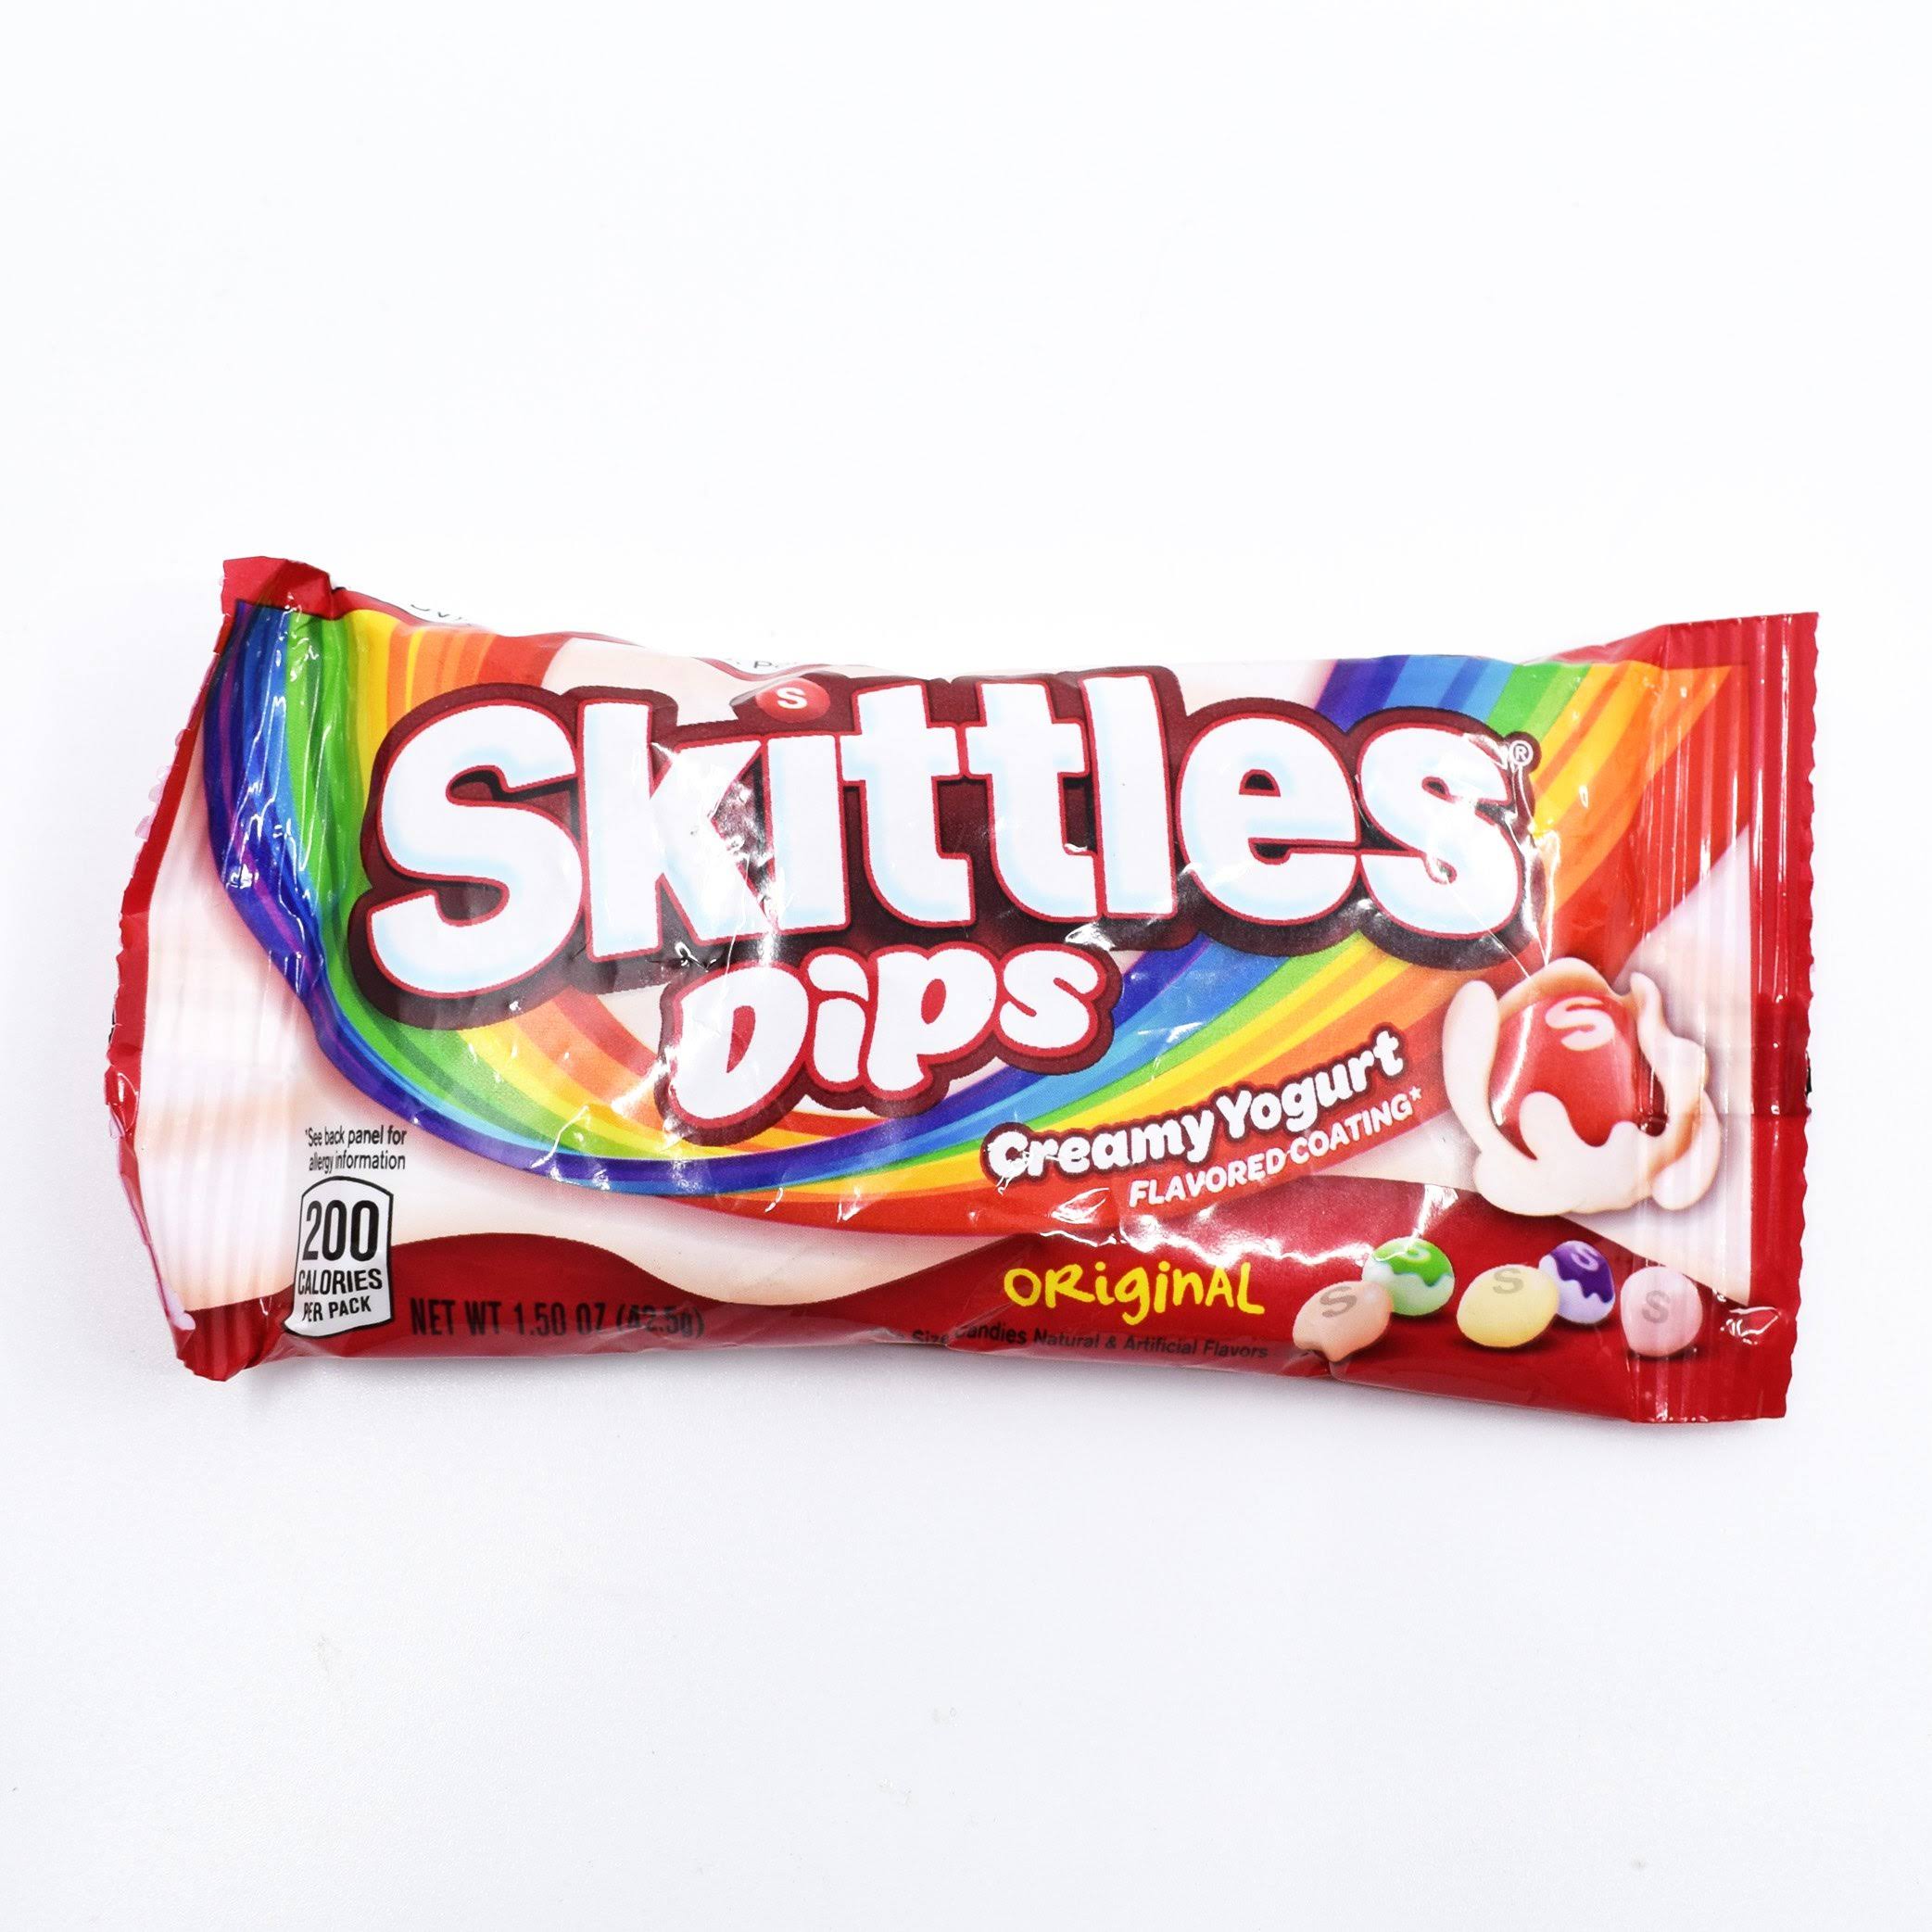 Skittles Dips Creamy Yoghurt Coating 42.5g